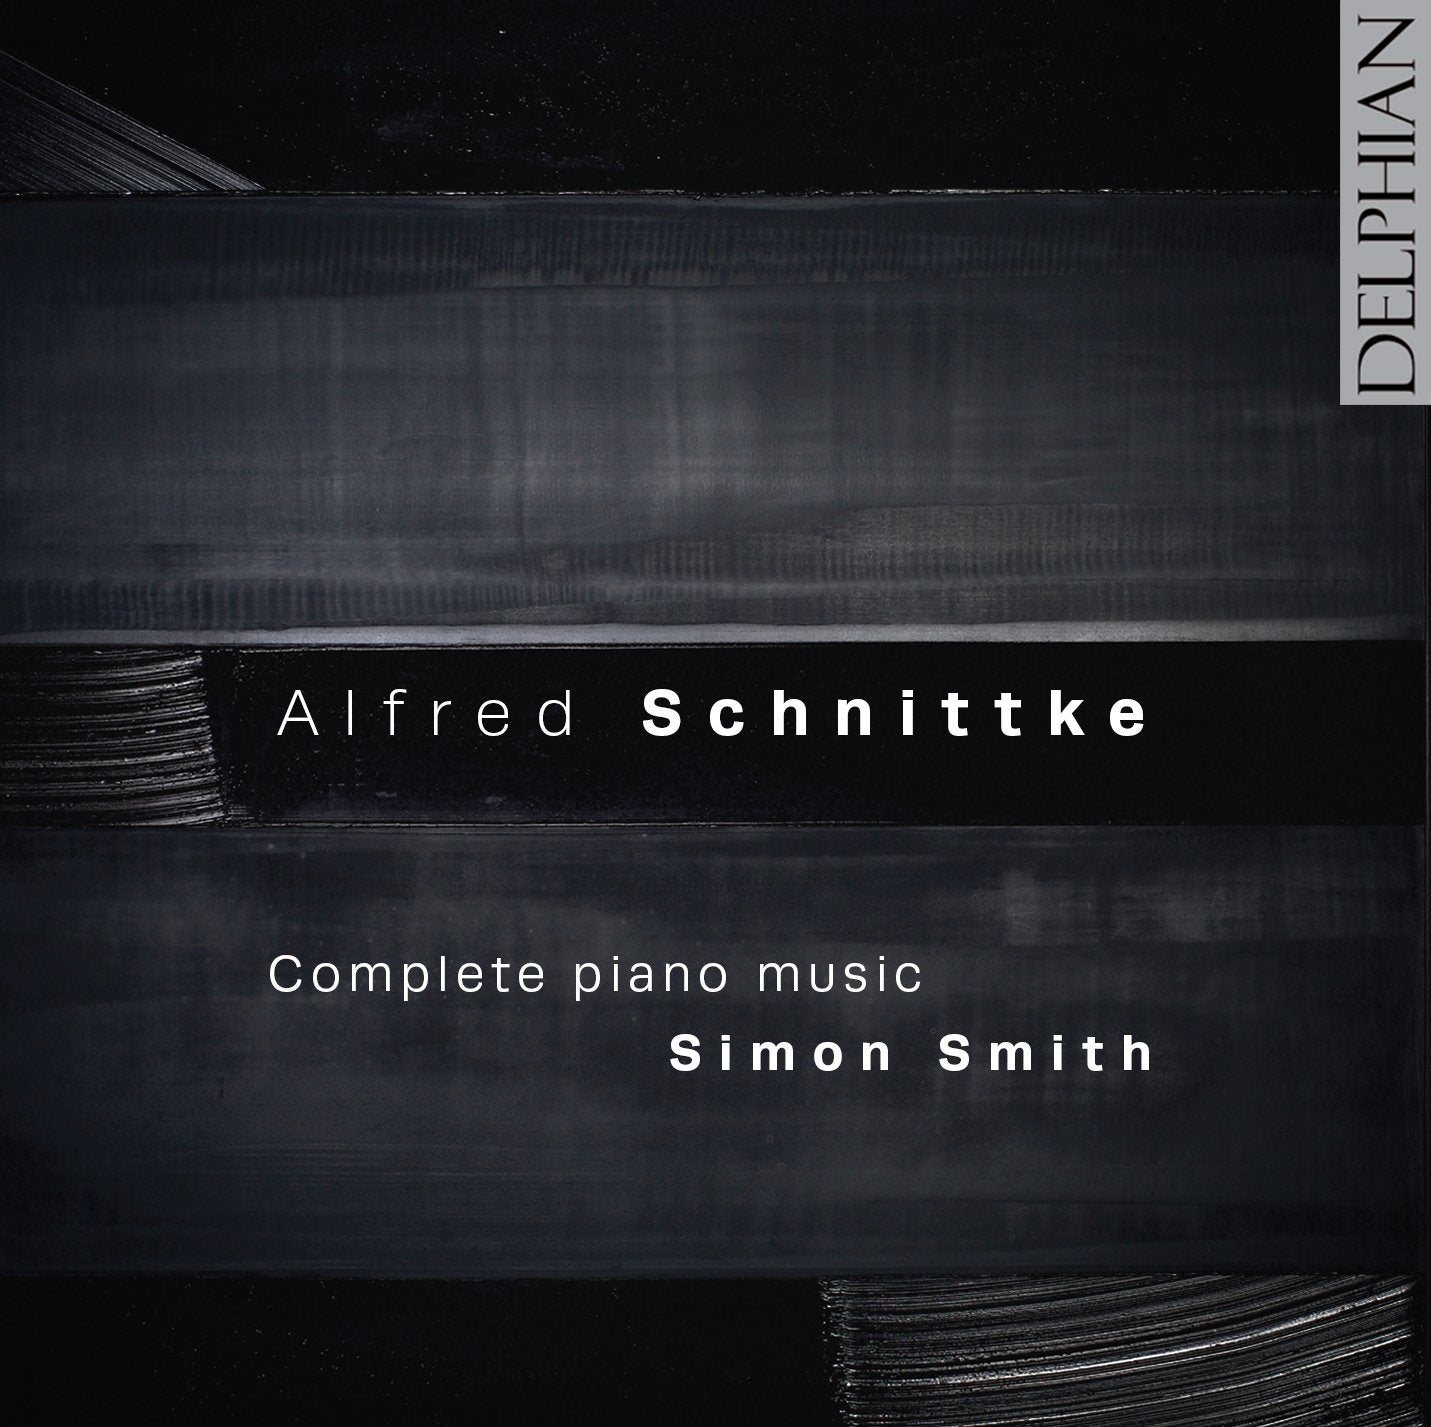 Alfred Schnittke: Complete piano music (2CD) CD Delphian Records